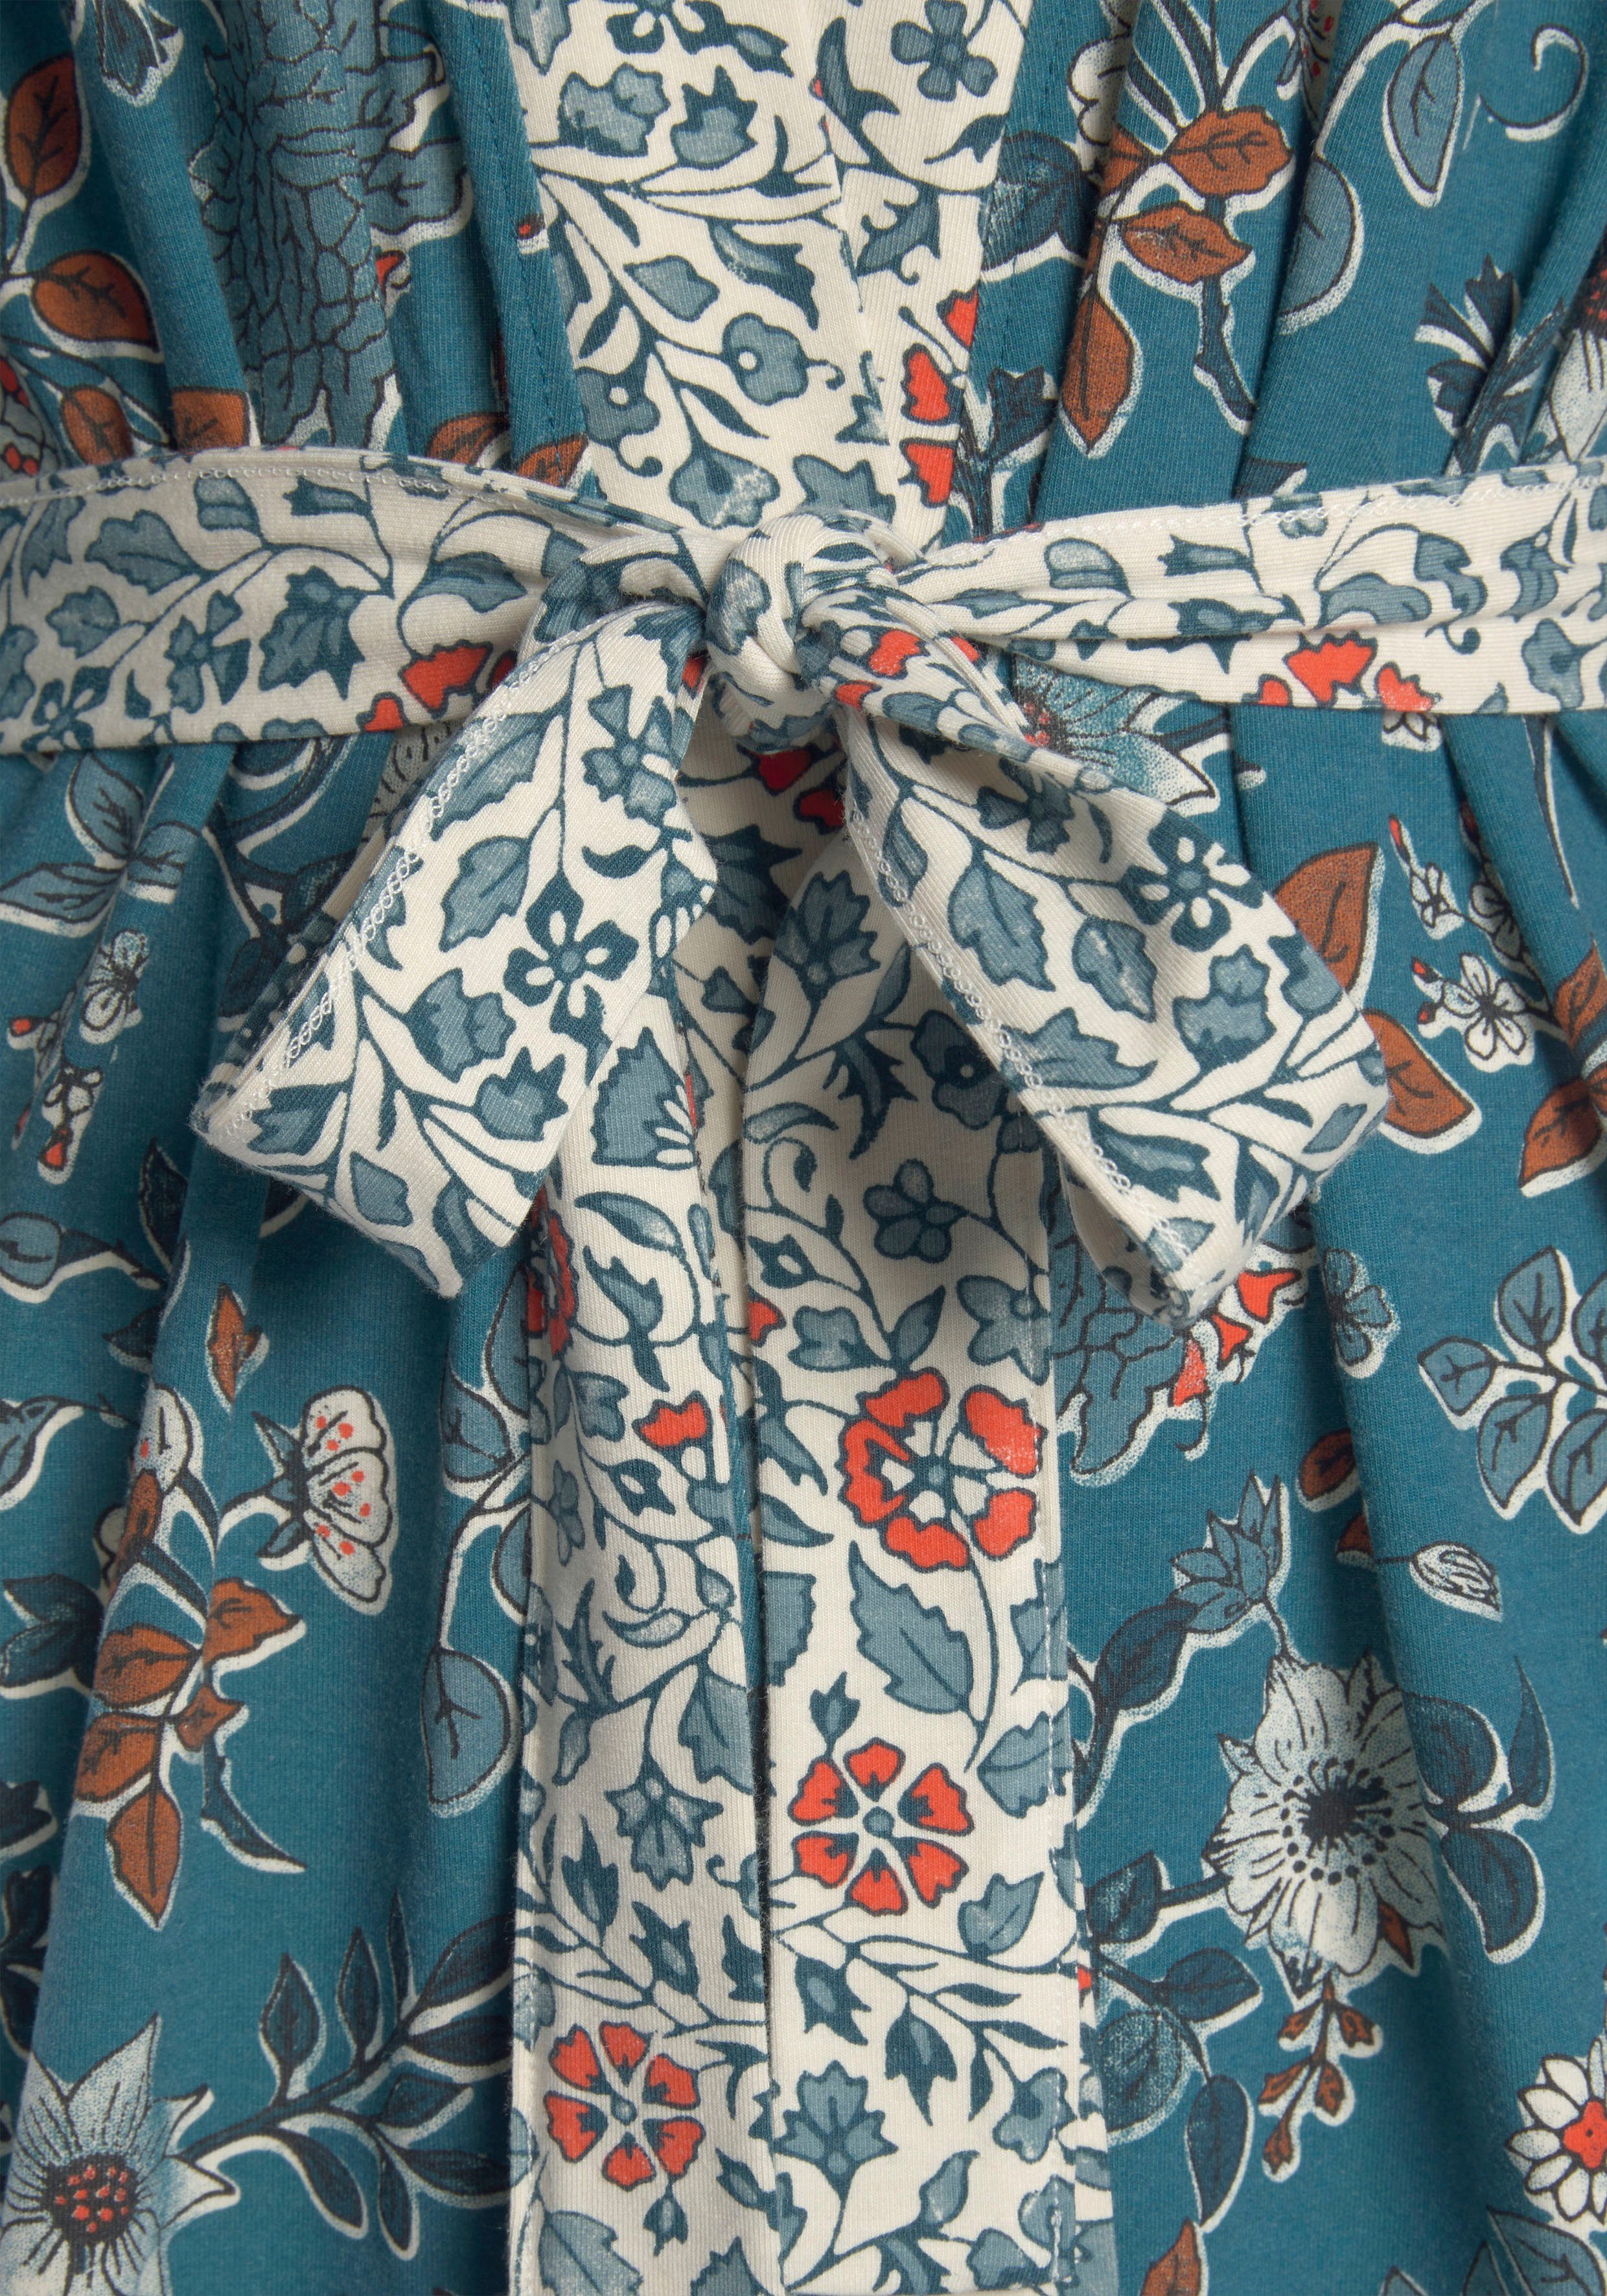 Blumen Jersey, rauchblau-ecru Allover-Druck Kimono, LASCANA Gürtel, Kurzform, mit Kimono-Kragen,